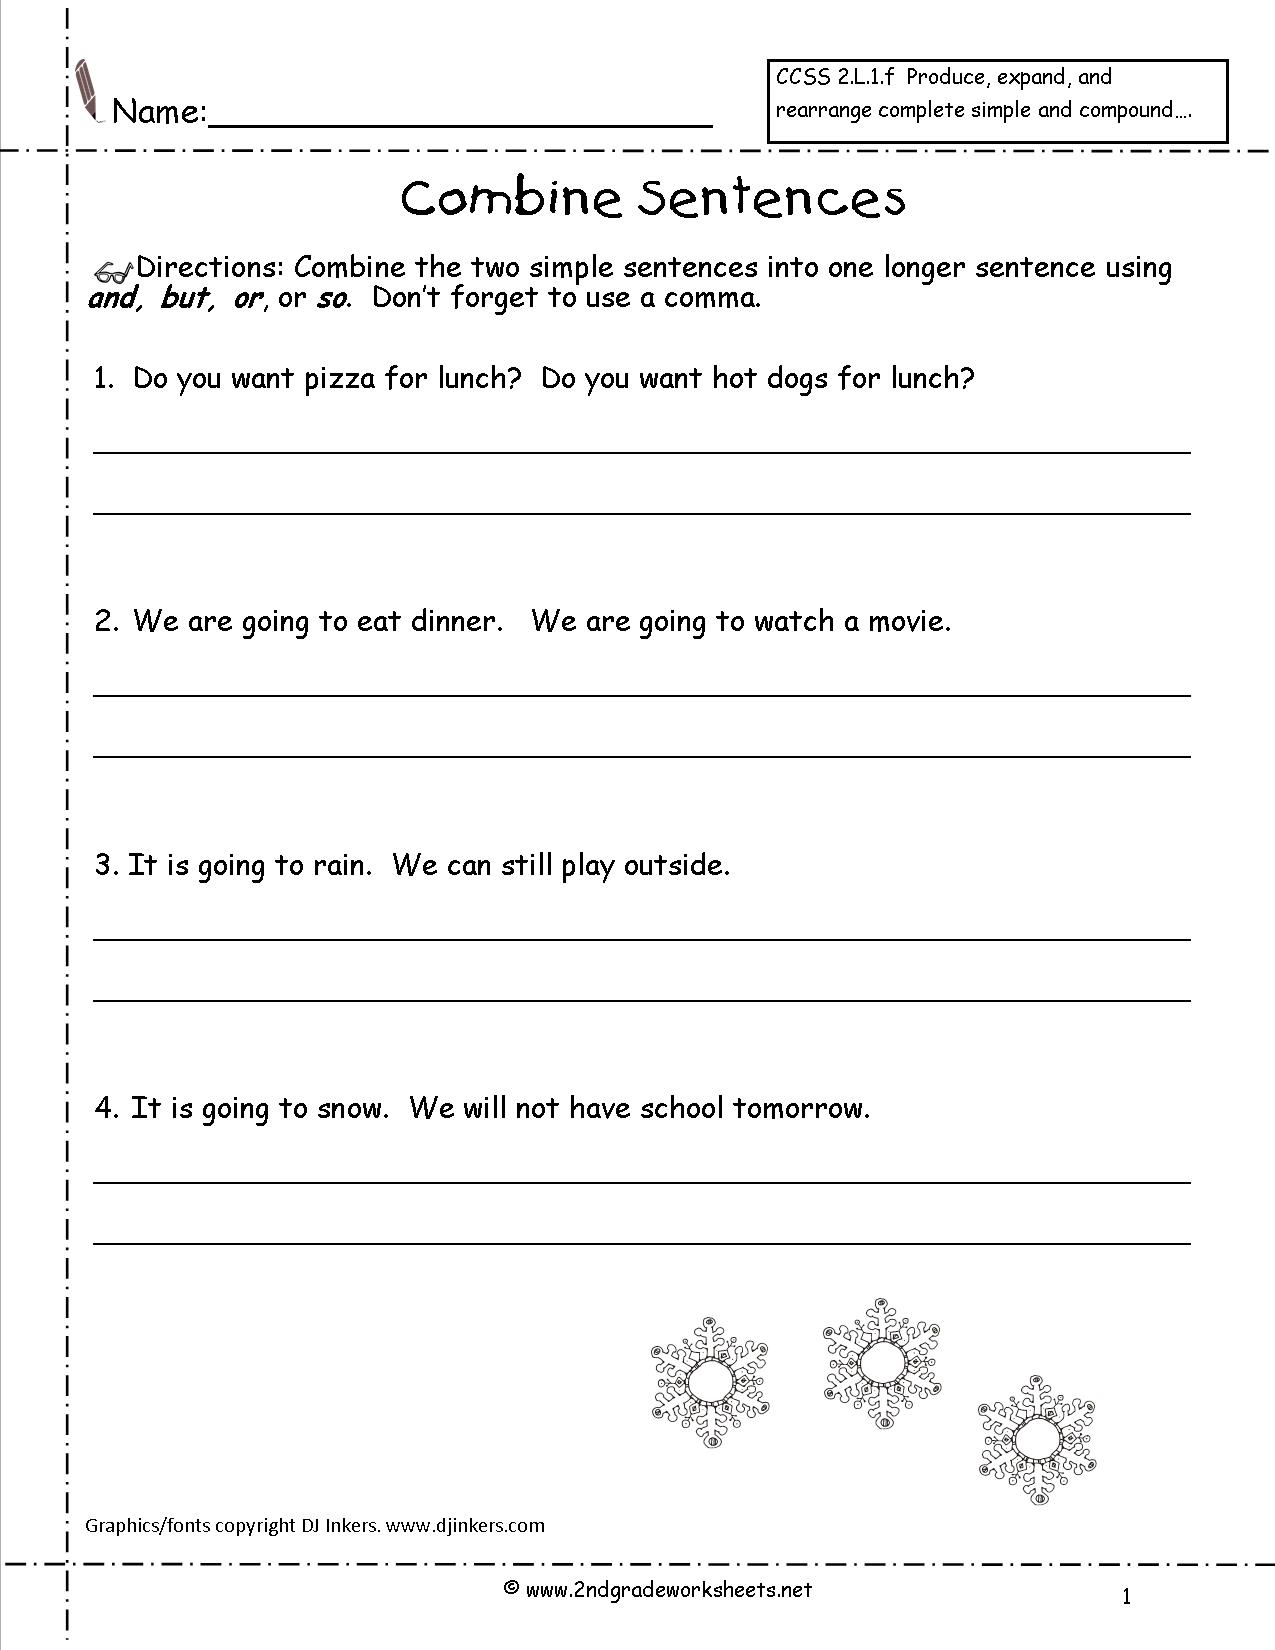 declarative-sentence-free-printable-worksheets-for-grade-1-kidpid